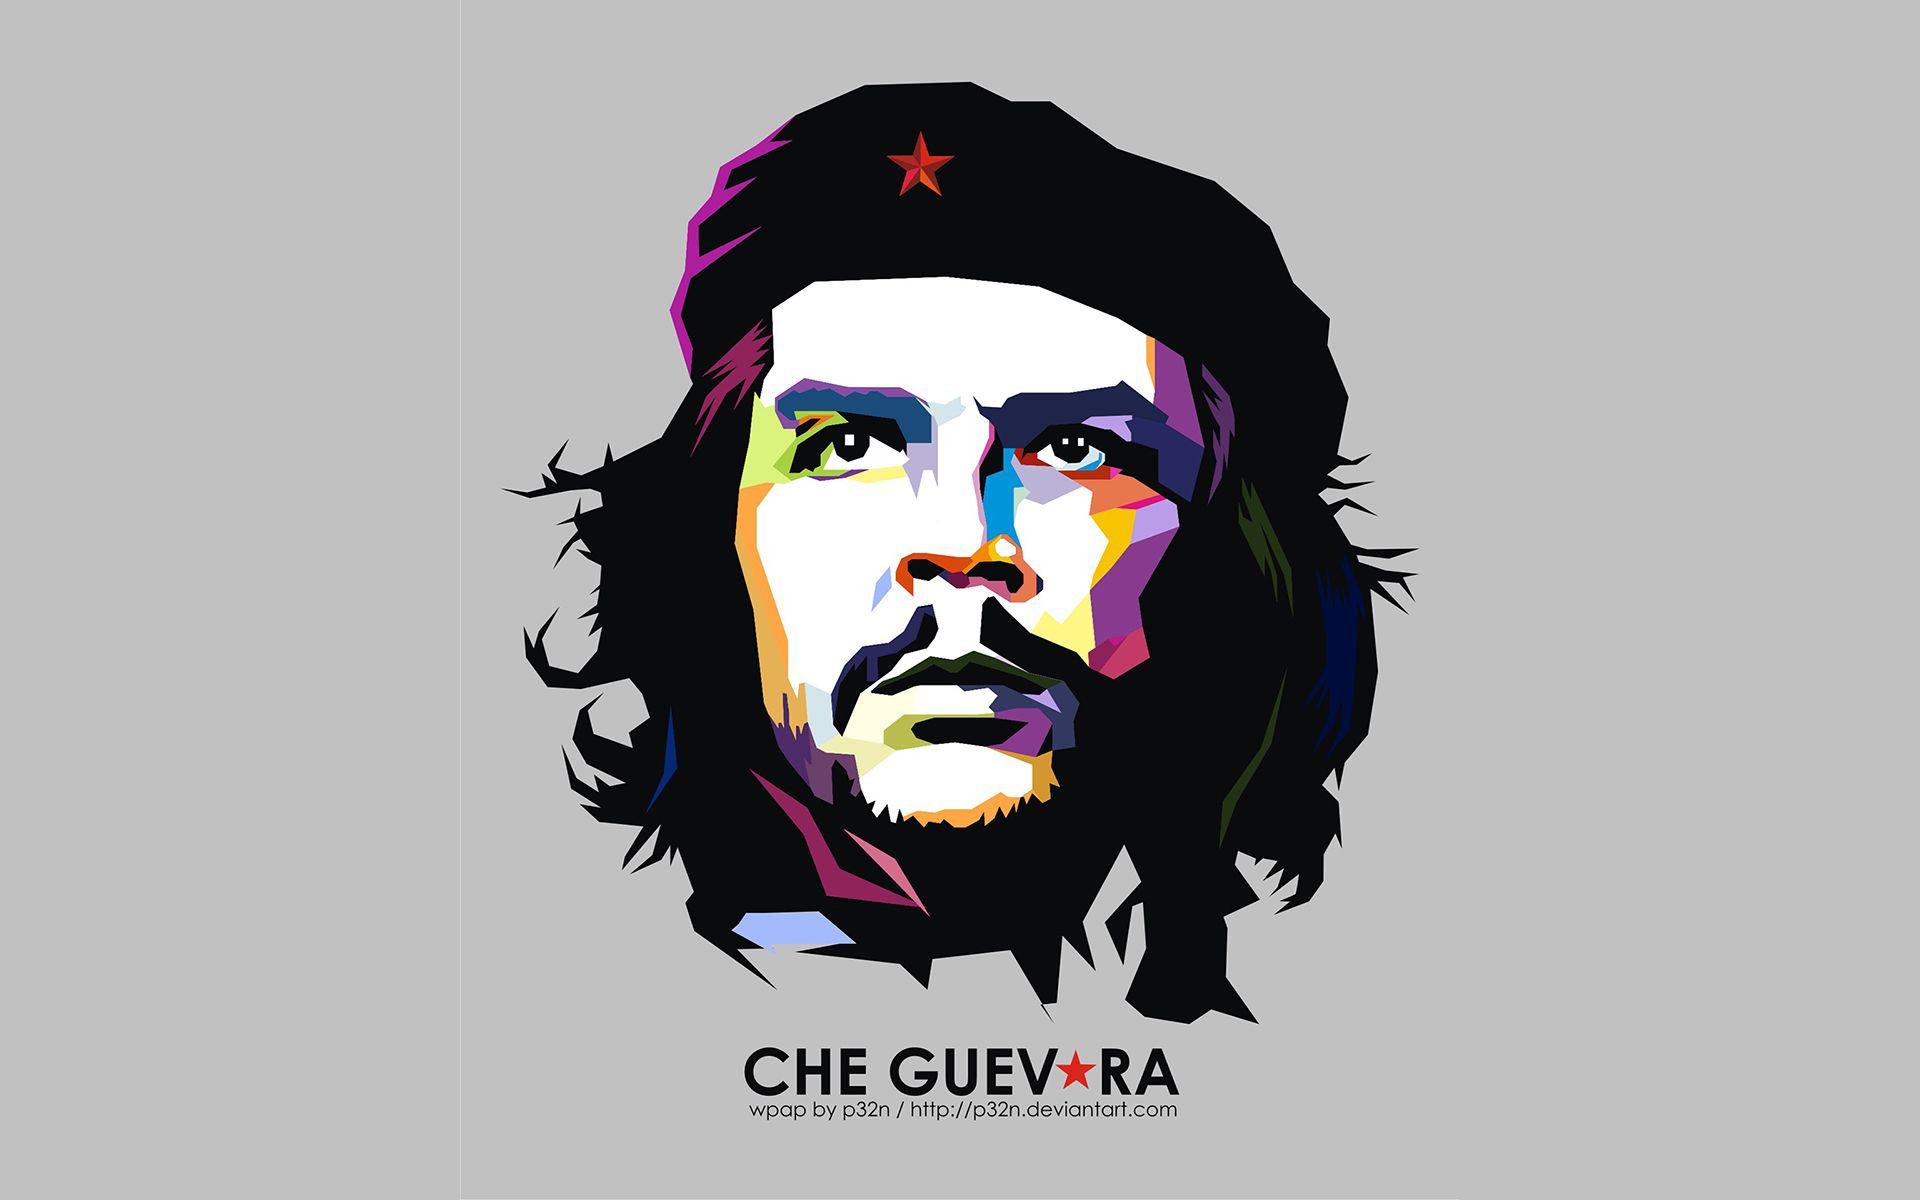 Che Guevara on WPAP Design. Free Desktop HD Wallpaper. Image